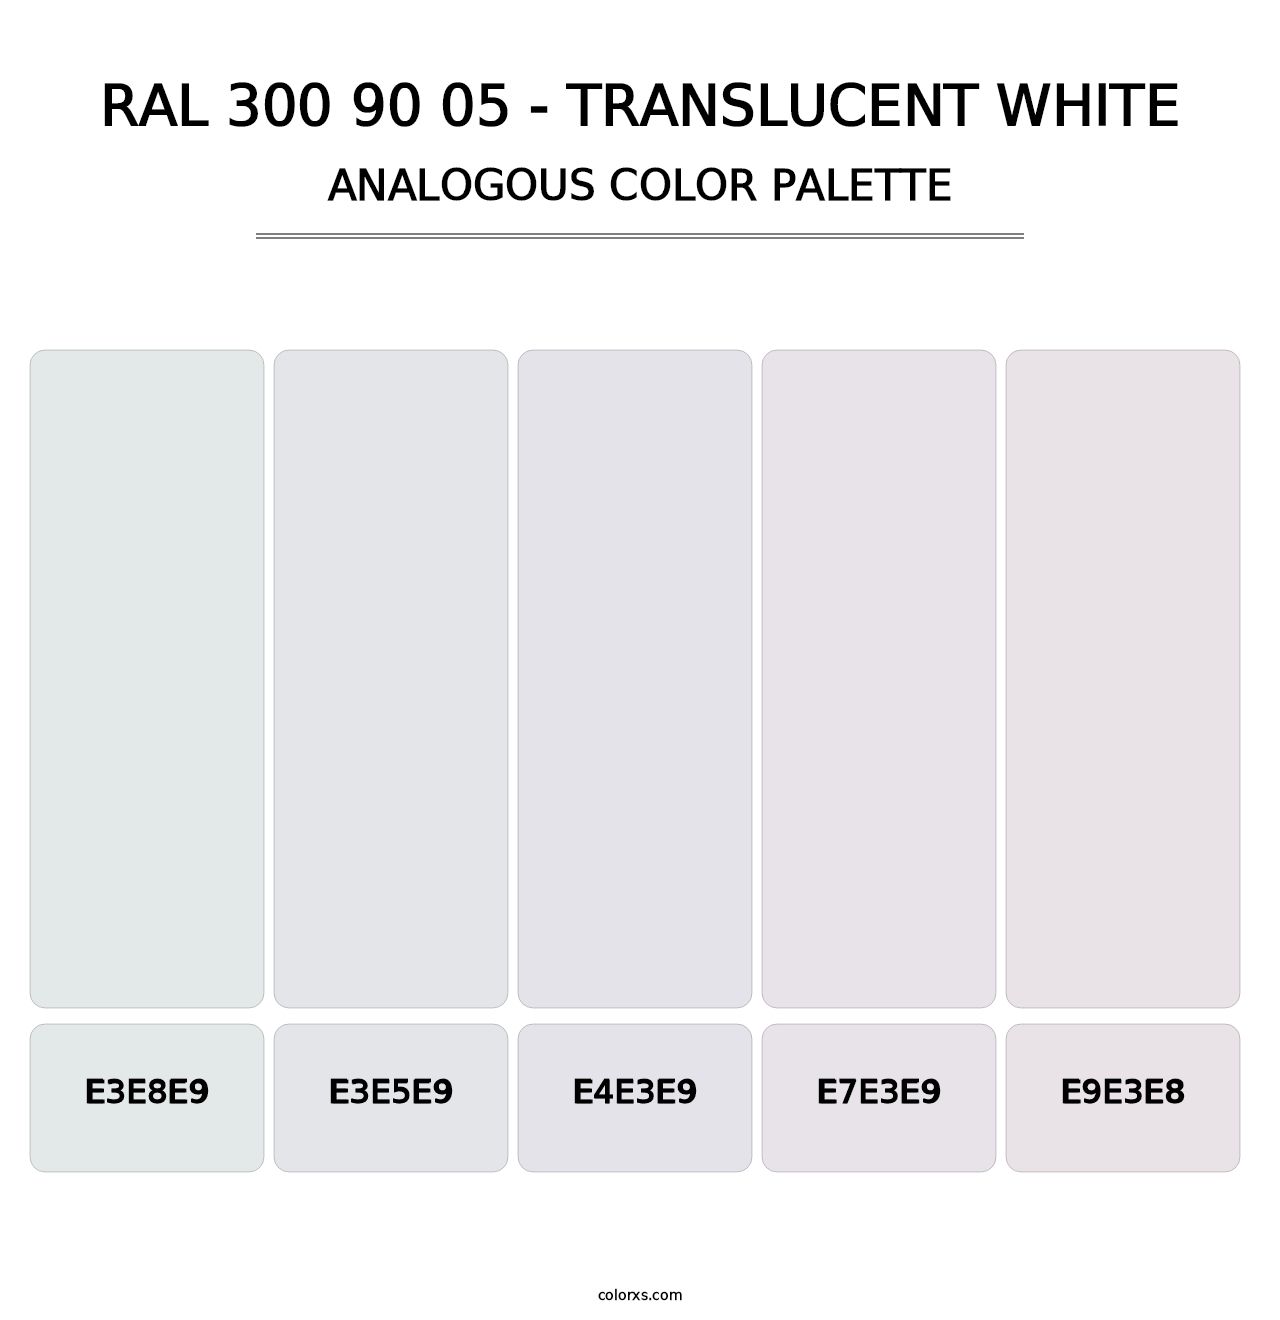 RAL 300 90 05 - Translucent White - Analogous Color Palette